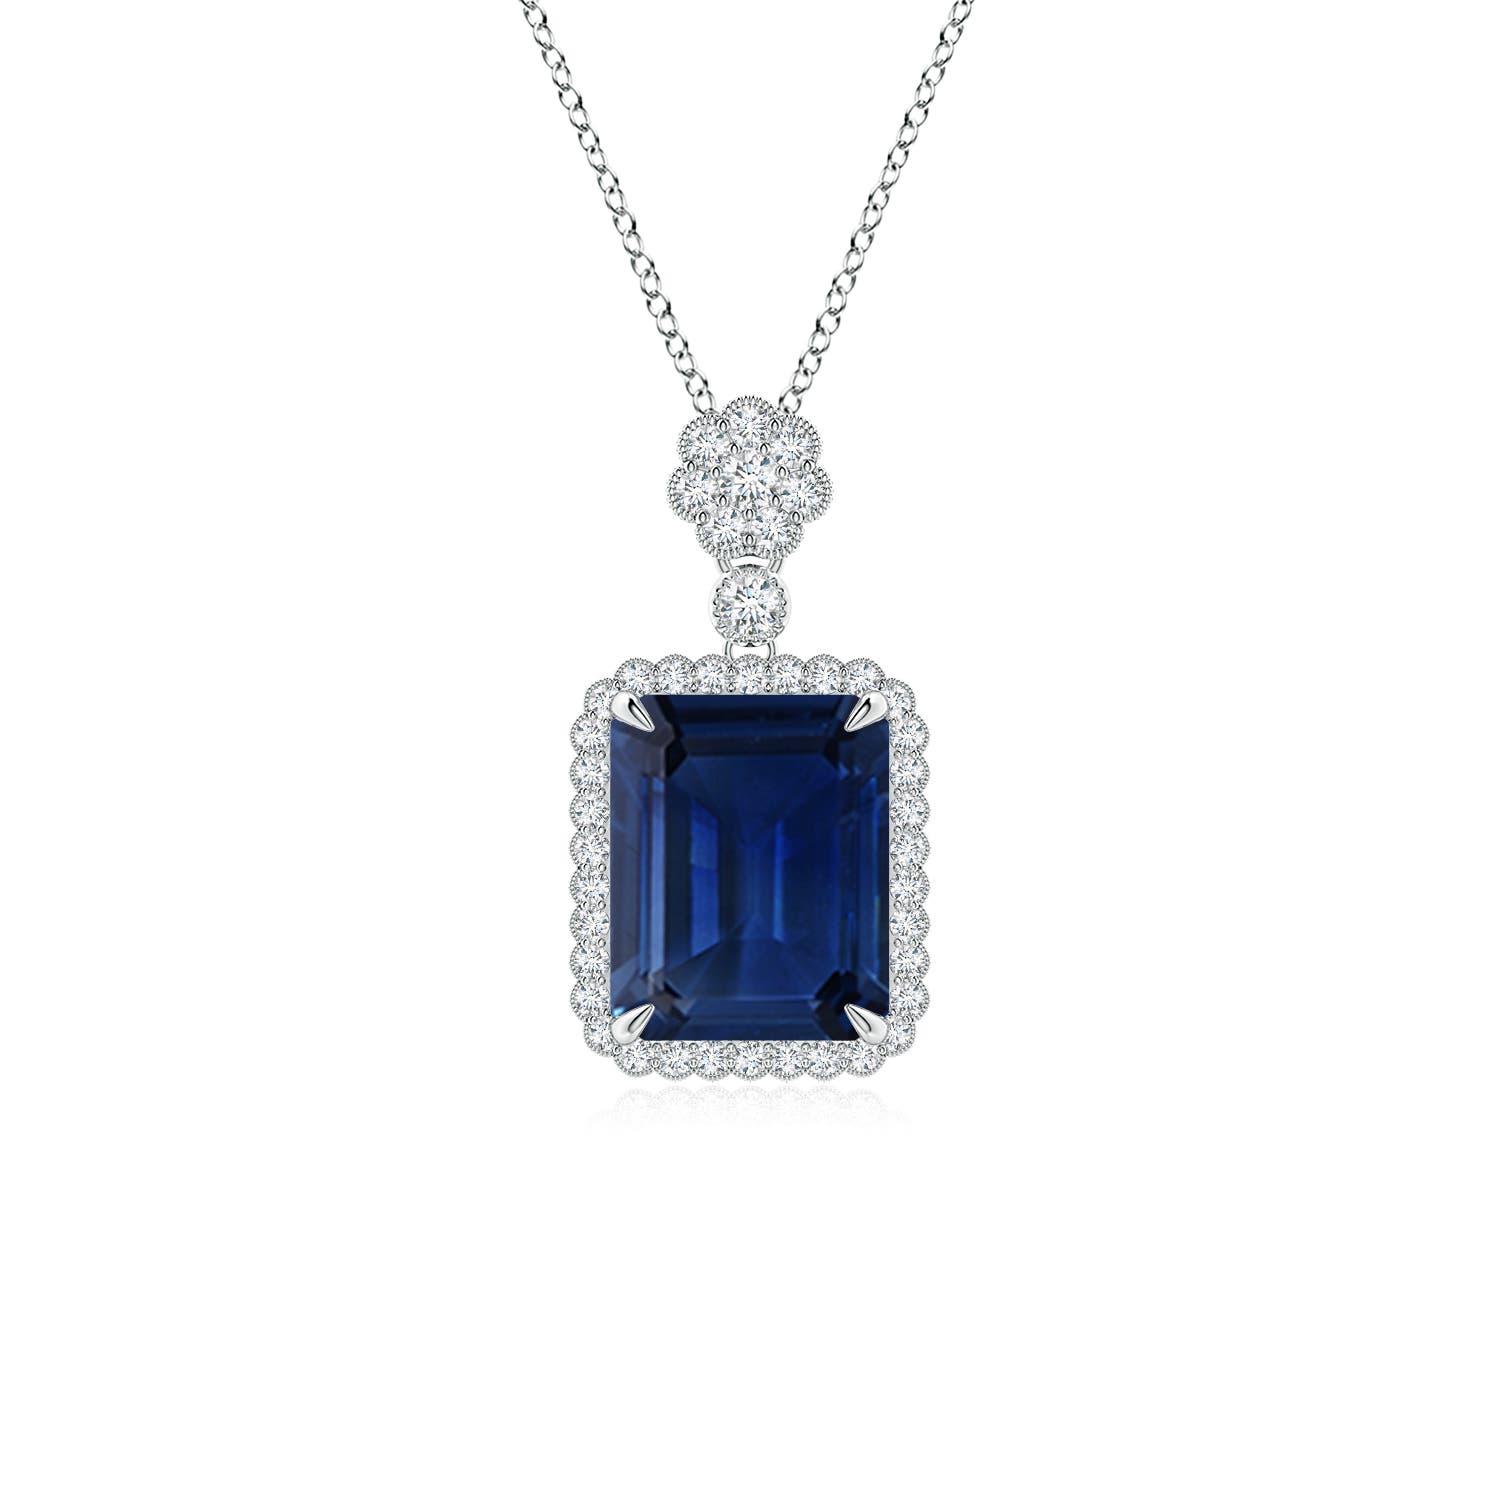 Emerald cut Blue Sapphire Pendant with Floral Bale